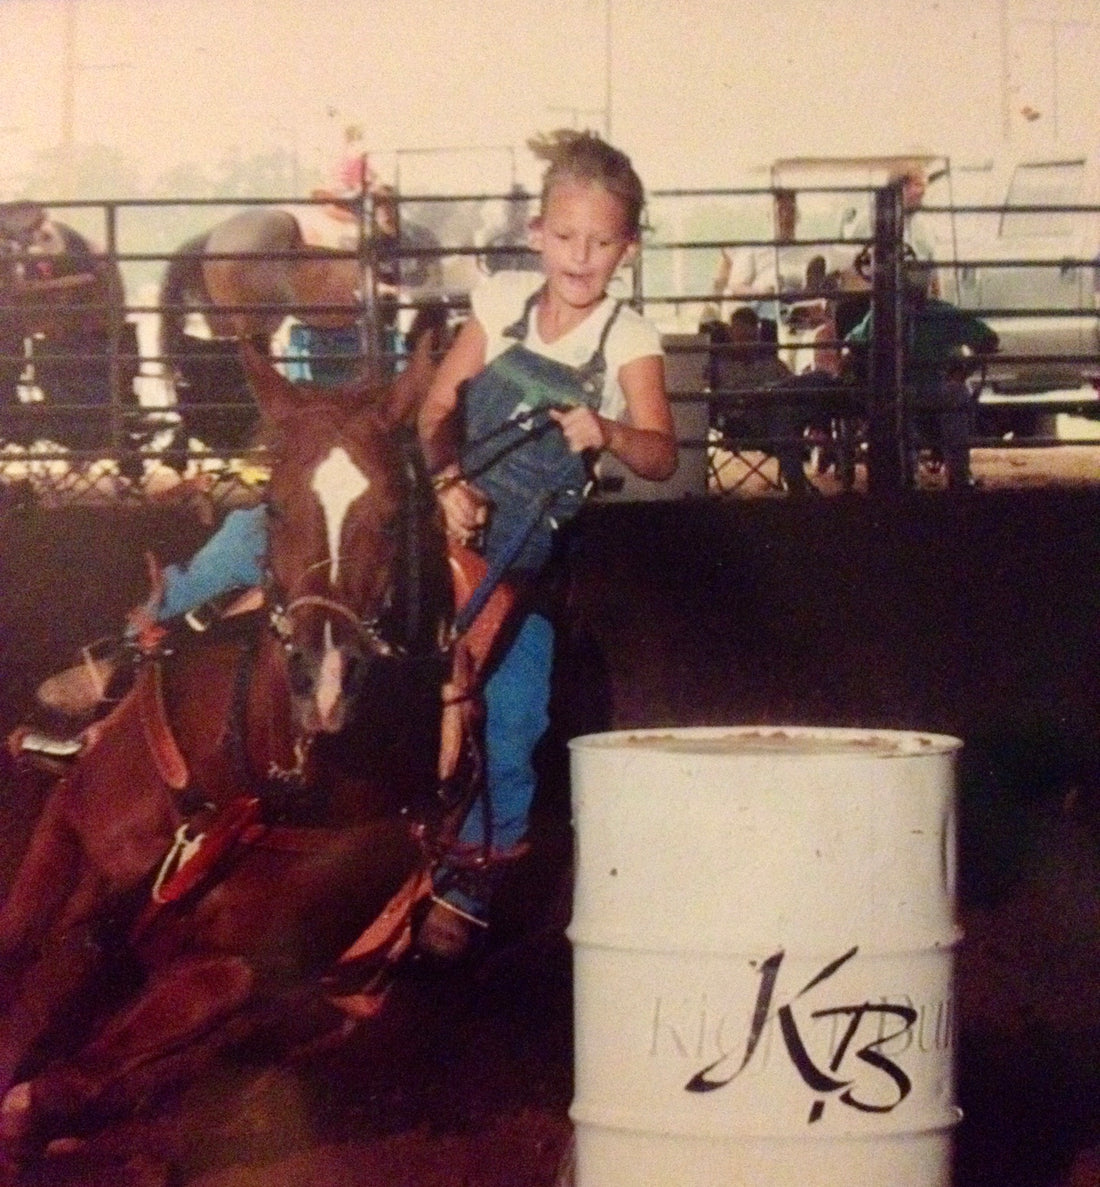 Young girl winning barrel races